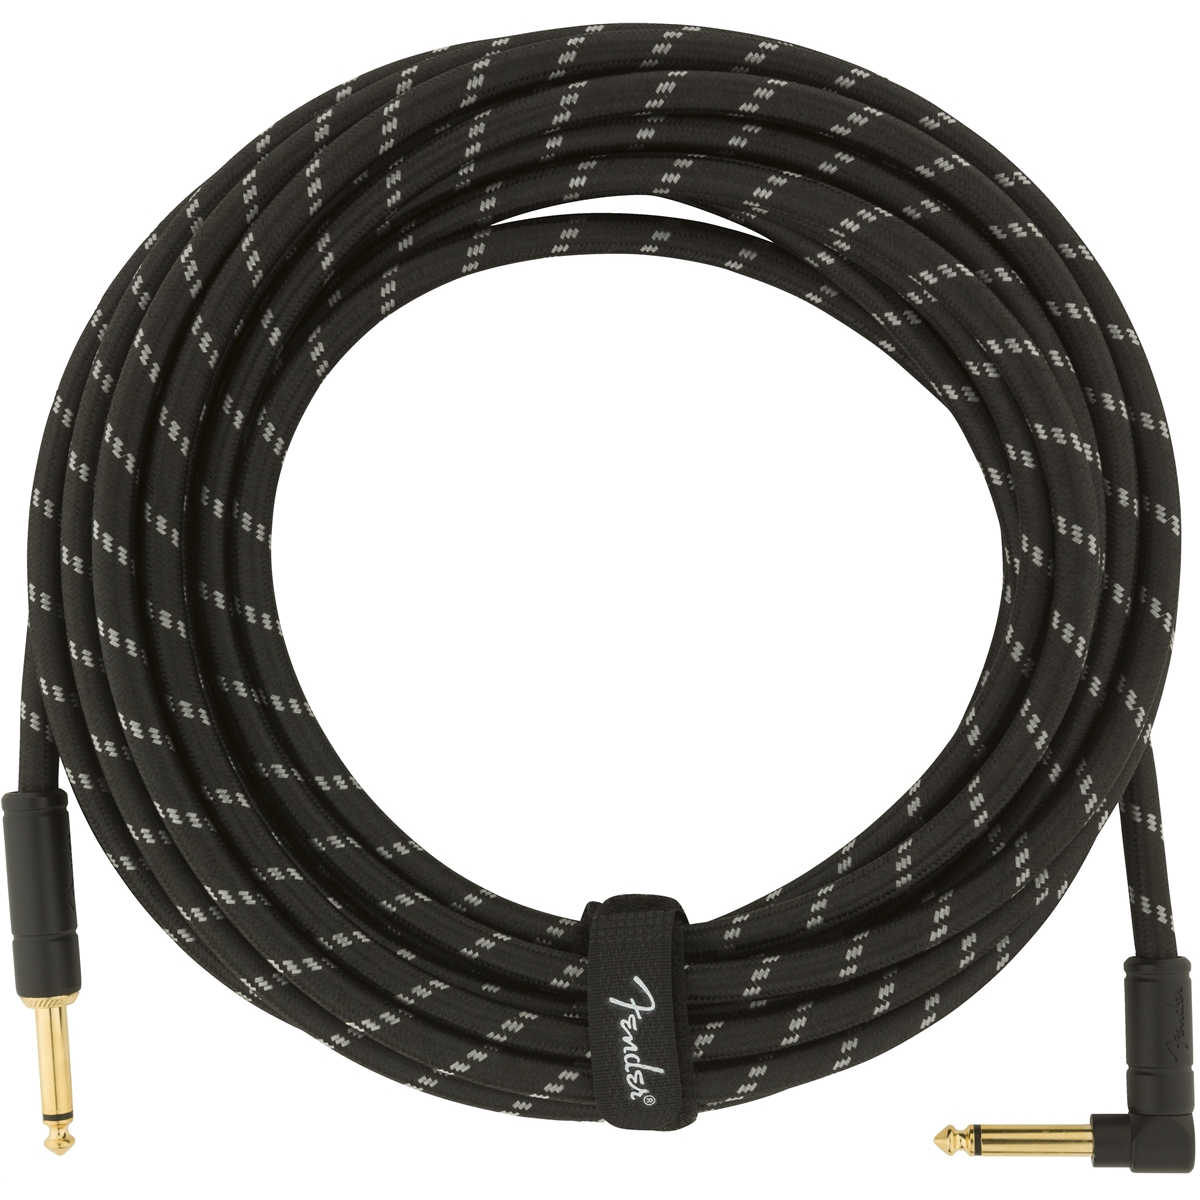 Fender Deluxe Series Instrument Cable, 25 FT, Black Tweed